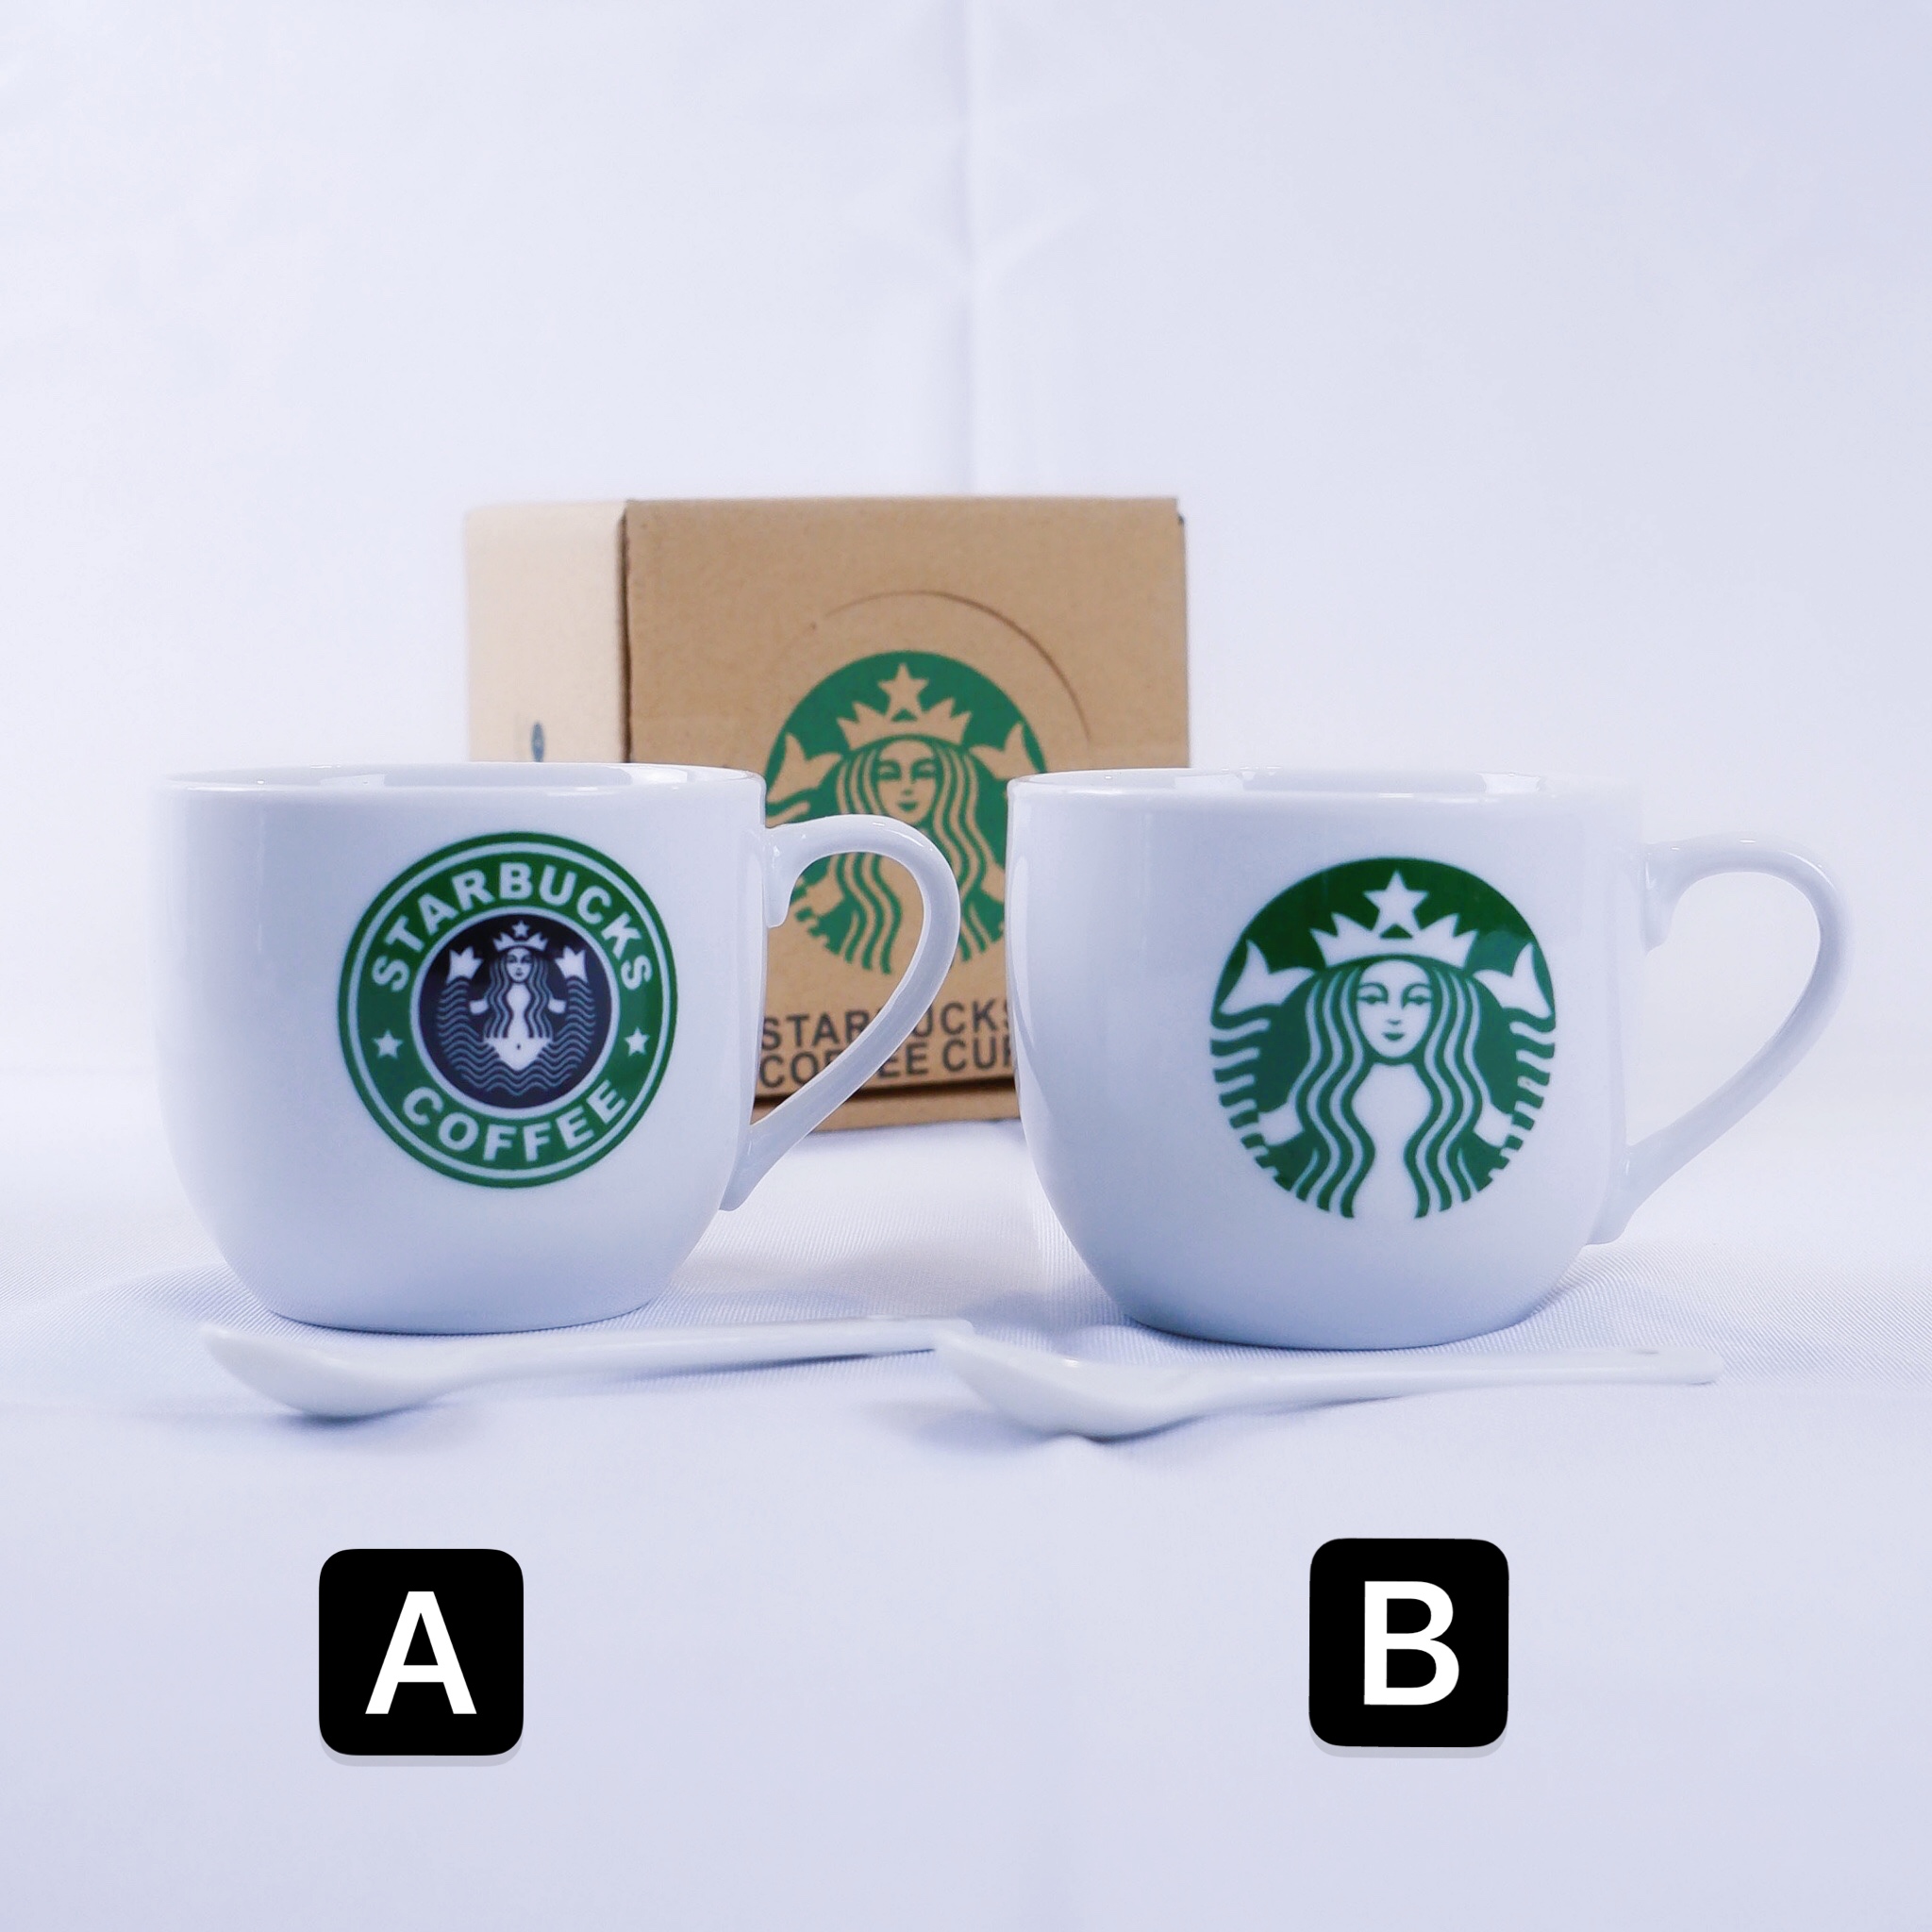 Starbucks coffee cup ถ้วยกาแฟสตาร์บัค ถ้วยกาแฟร้อน แก้วชงกาแฟ​Starbucks​ Set box ครบทั้งช้อนและแก้ว ถ้วยชงกาแฟ